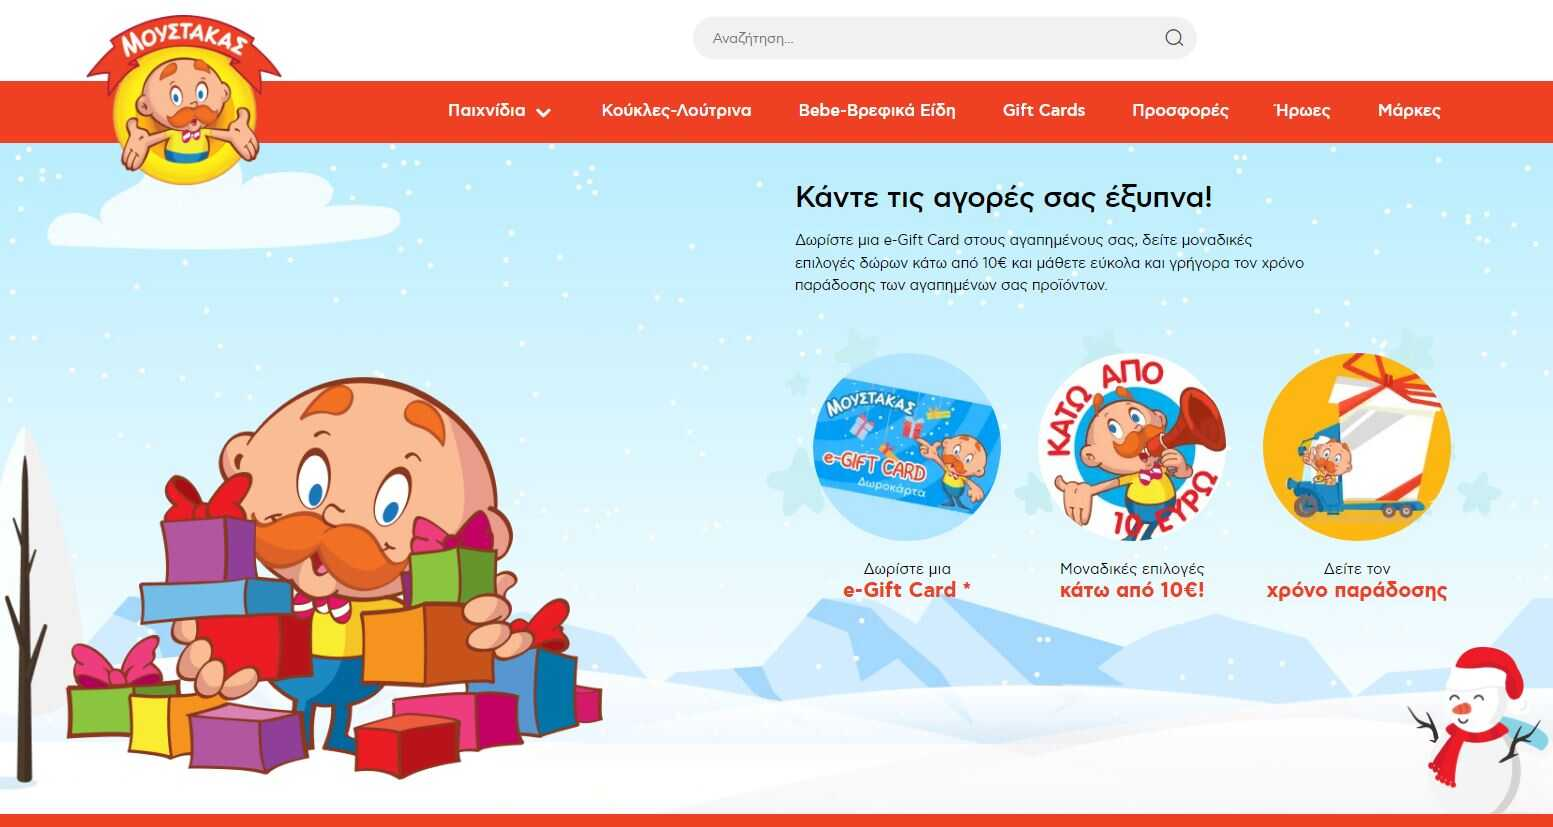 Moustakas - ιστοσελίδα με δώρα, φθηνά παιχνίδια